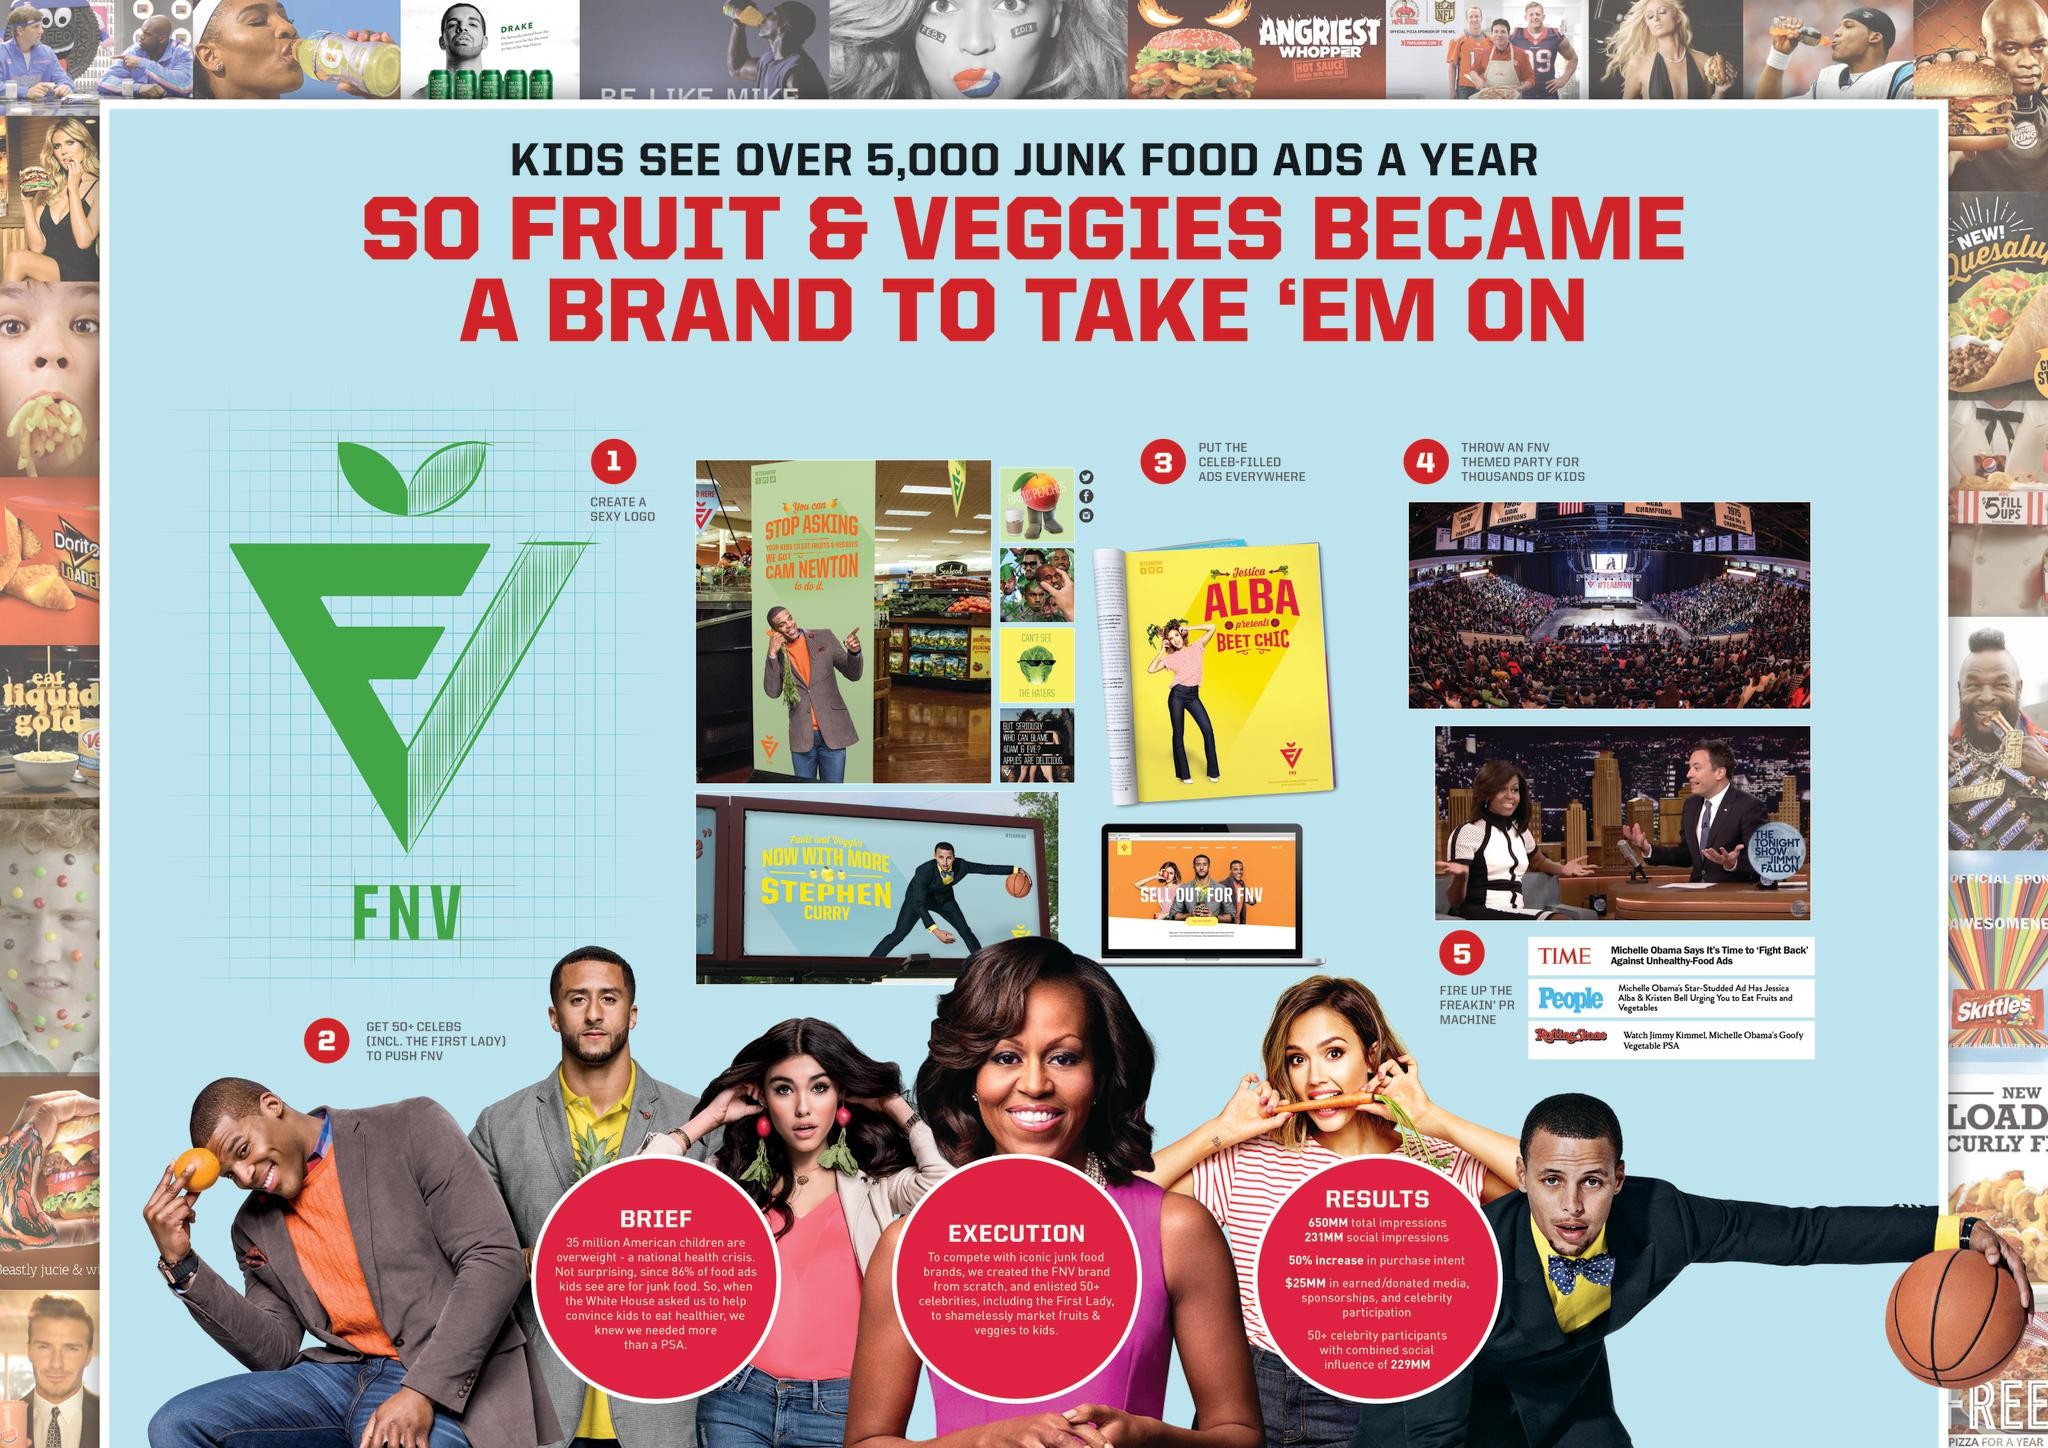 FNV - A brand for fruit & veggies